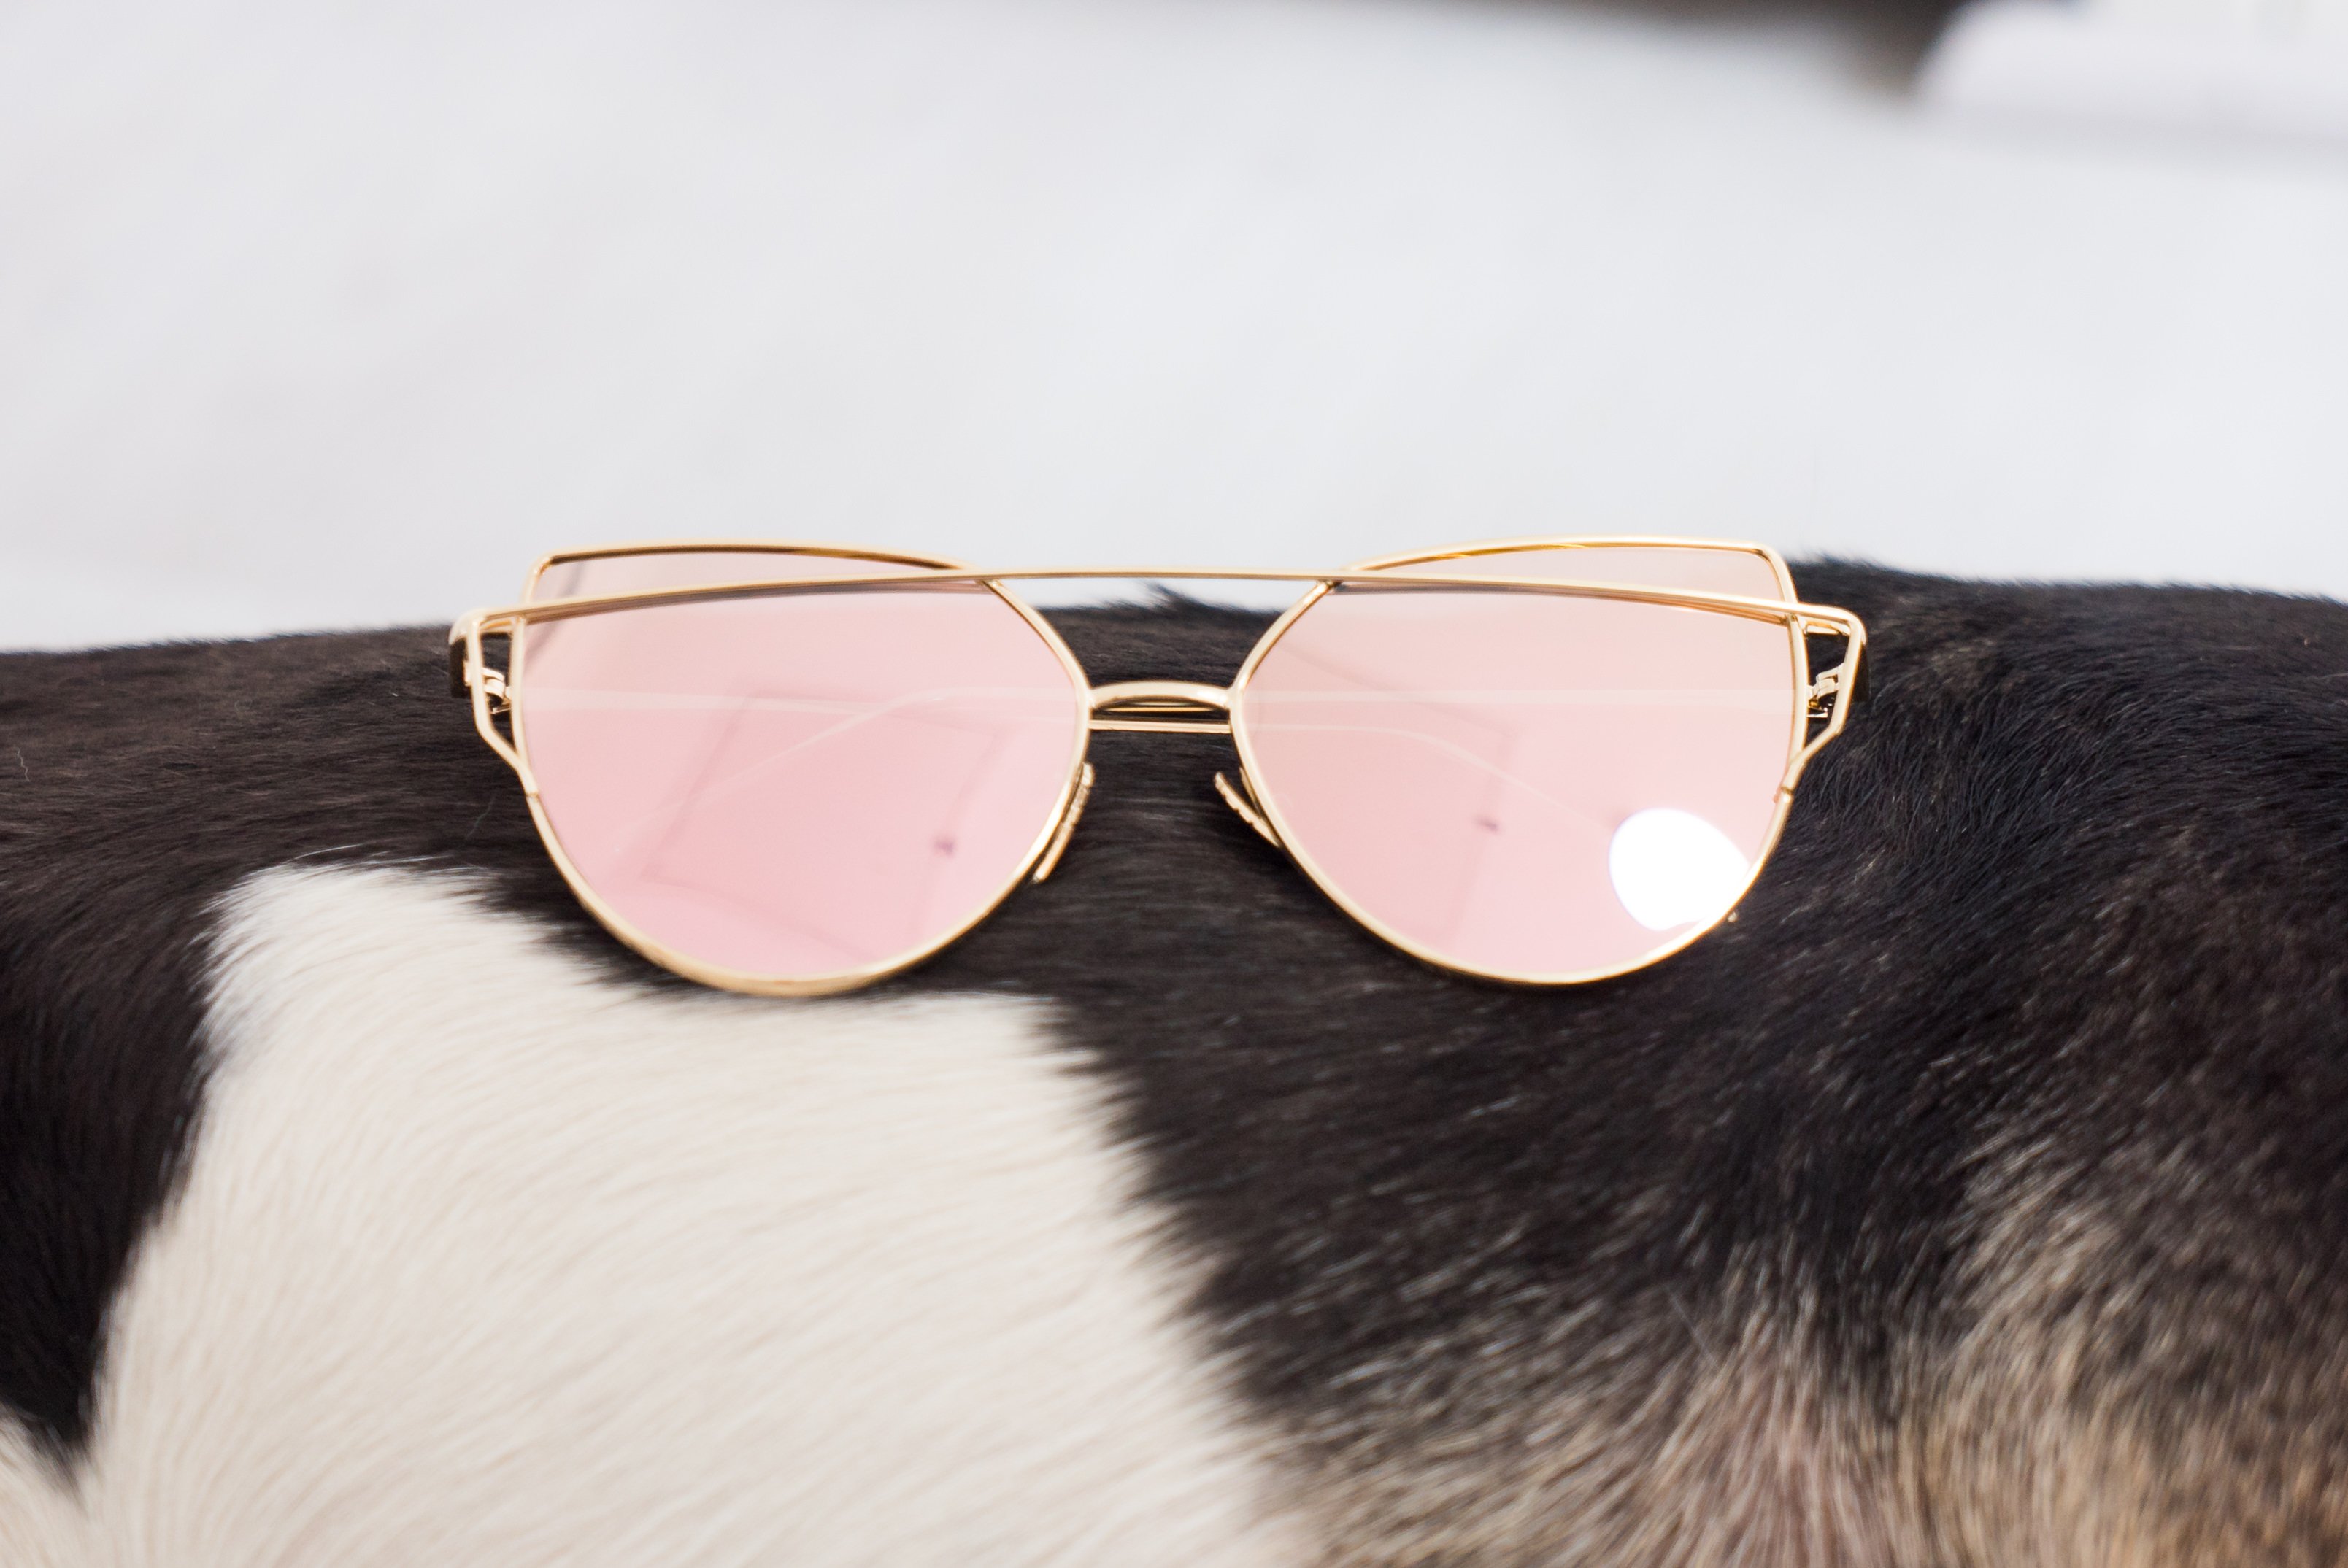 Ebay Deals - Rose Gold Mirrored Sunglasses - £1.80